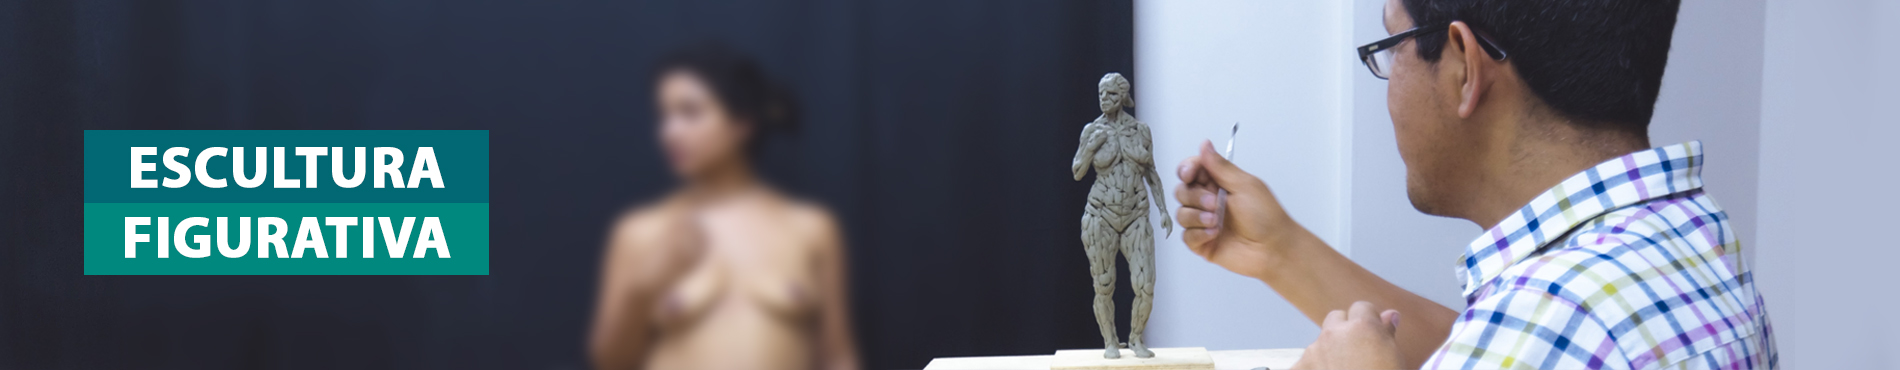 Escultura figurativa - Herakles Estudio